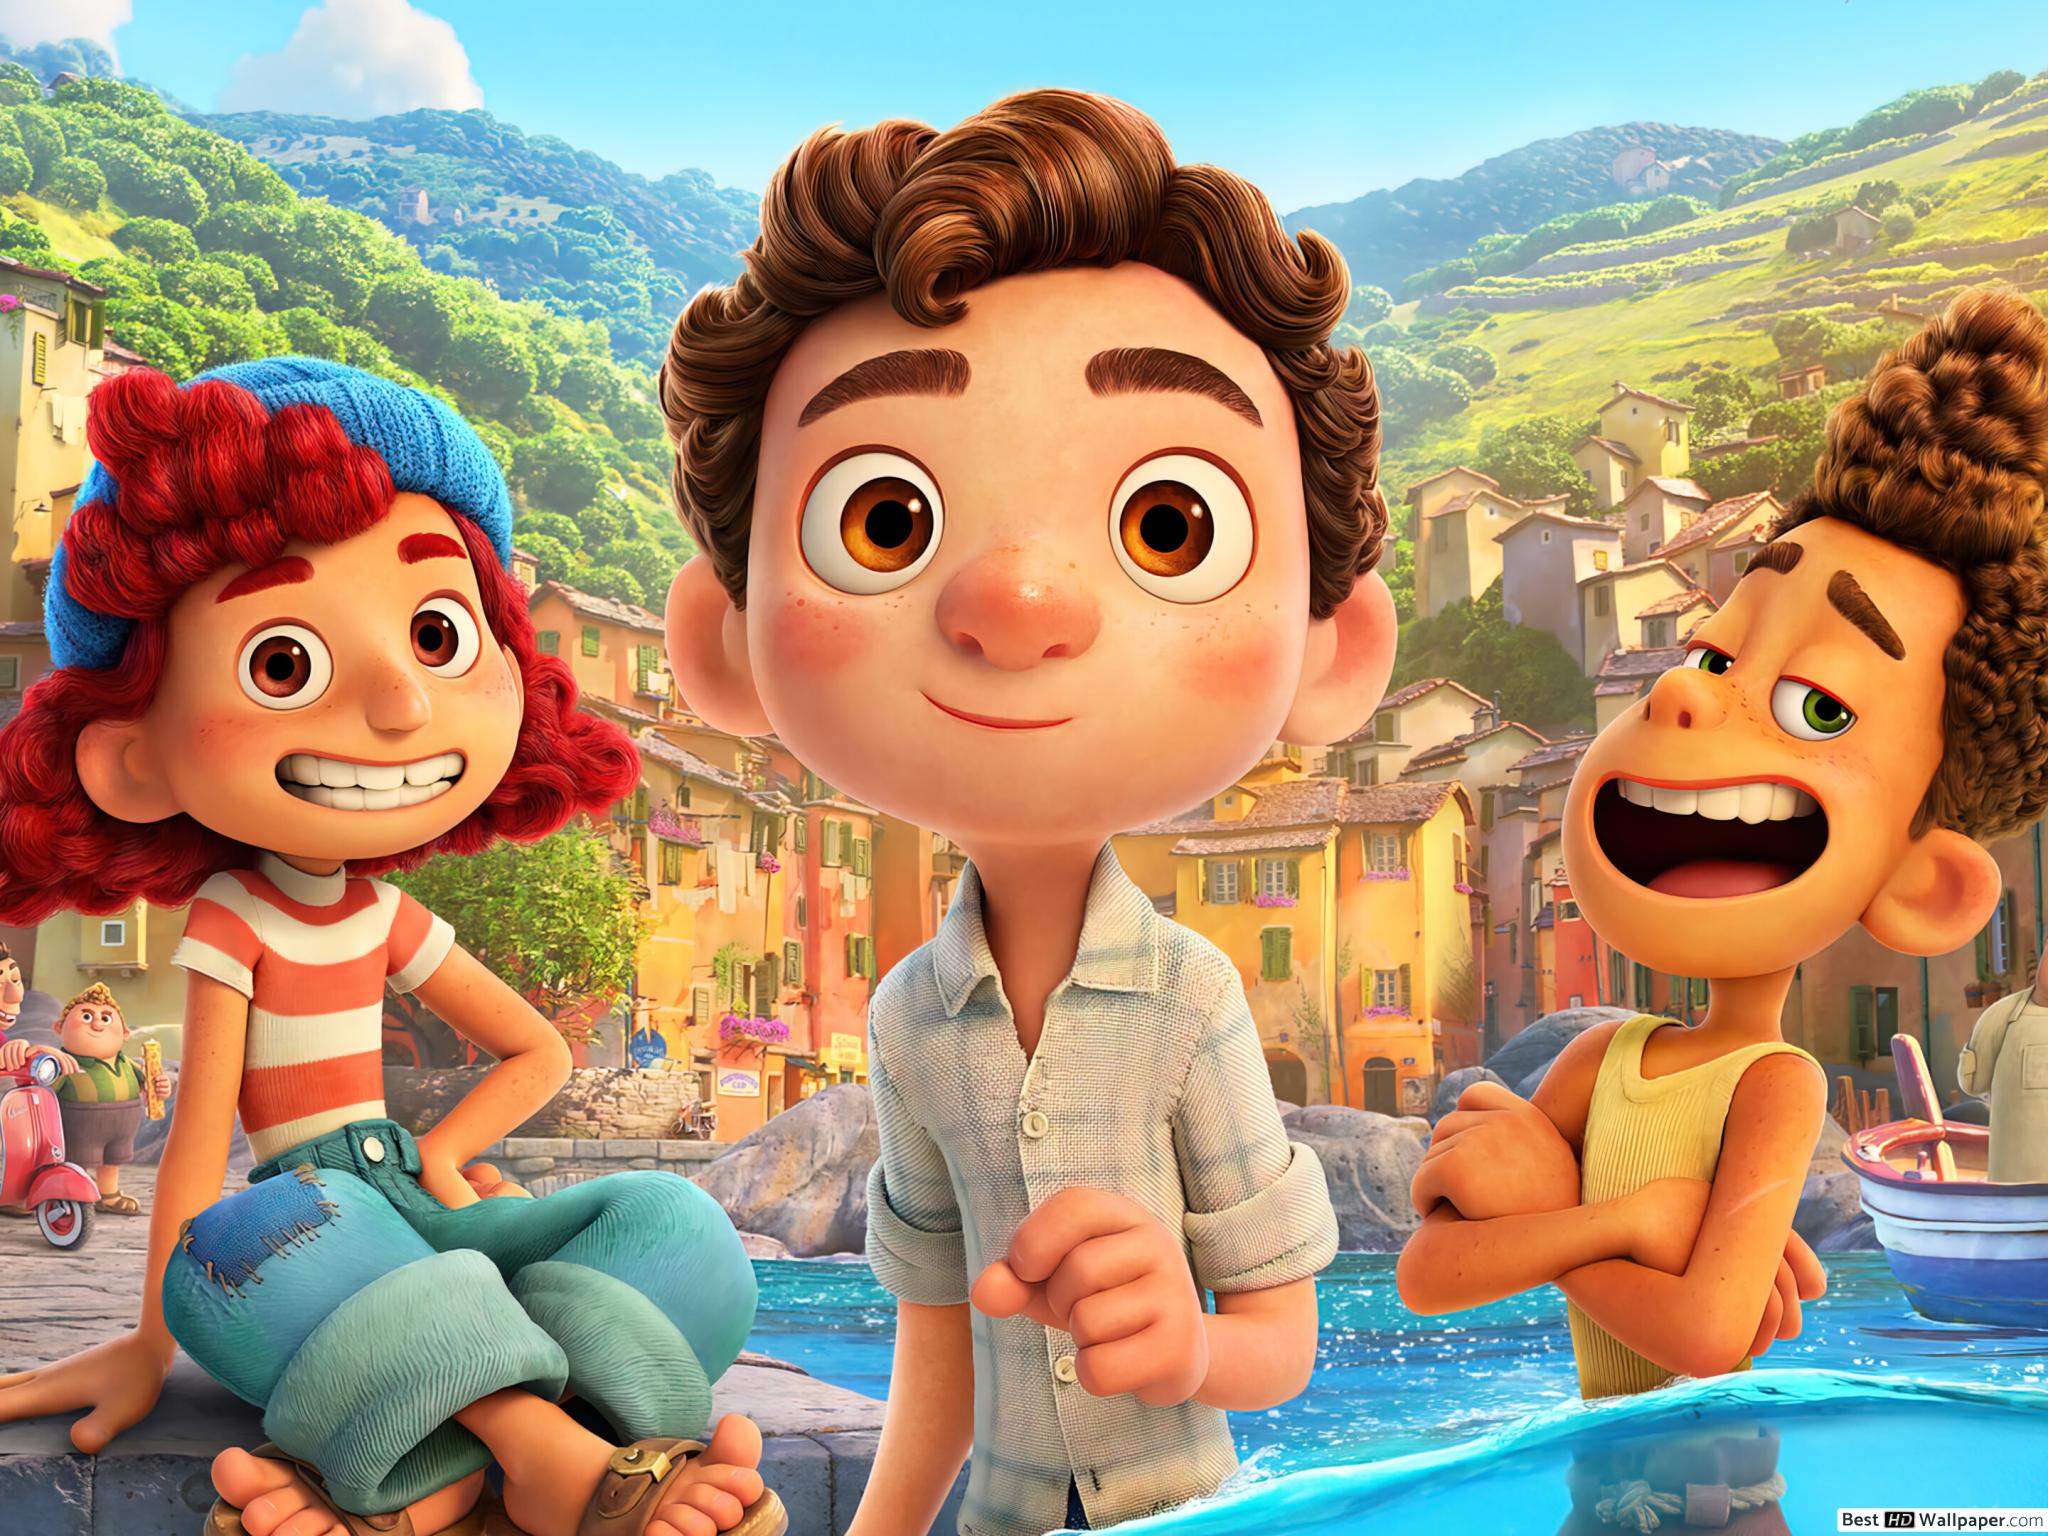 2021) 'LUCA' X Pixar Animated Movie HD wallpaper download